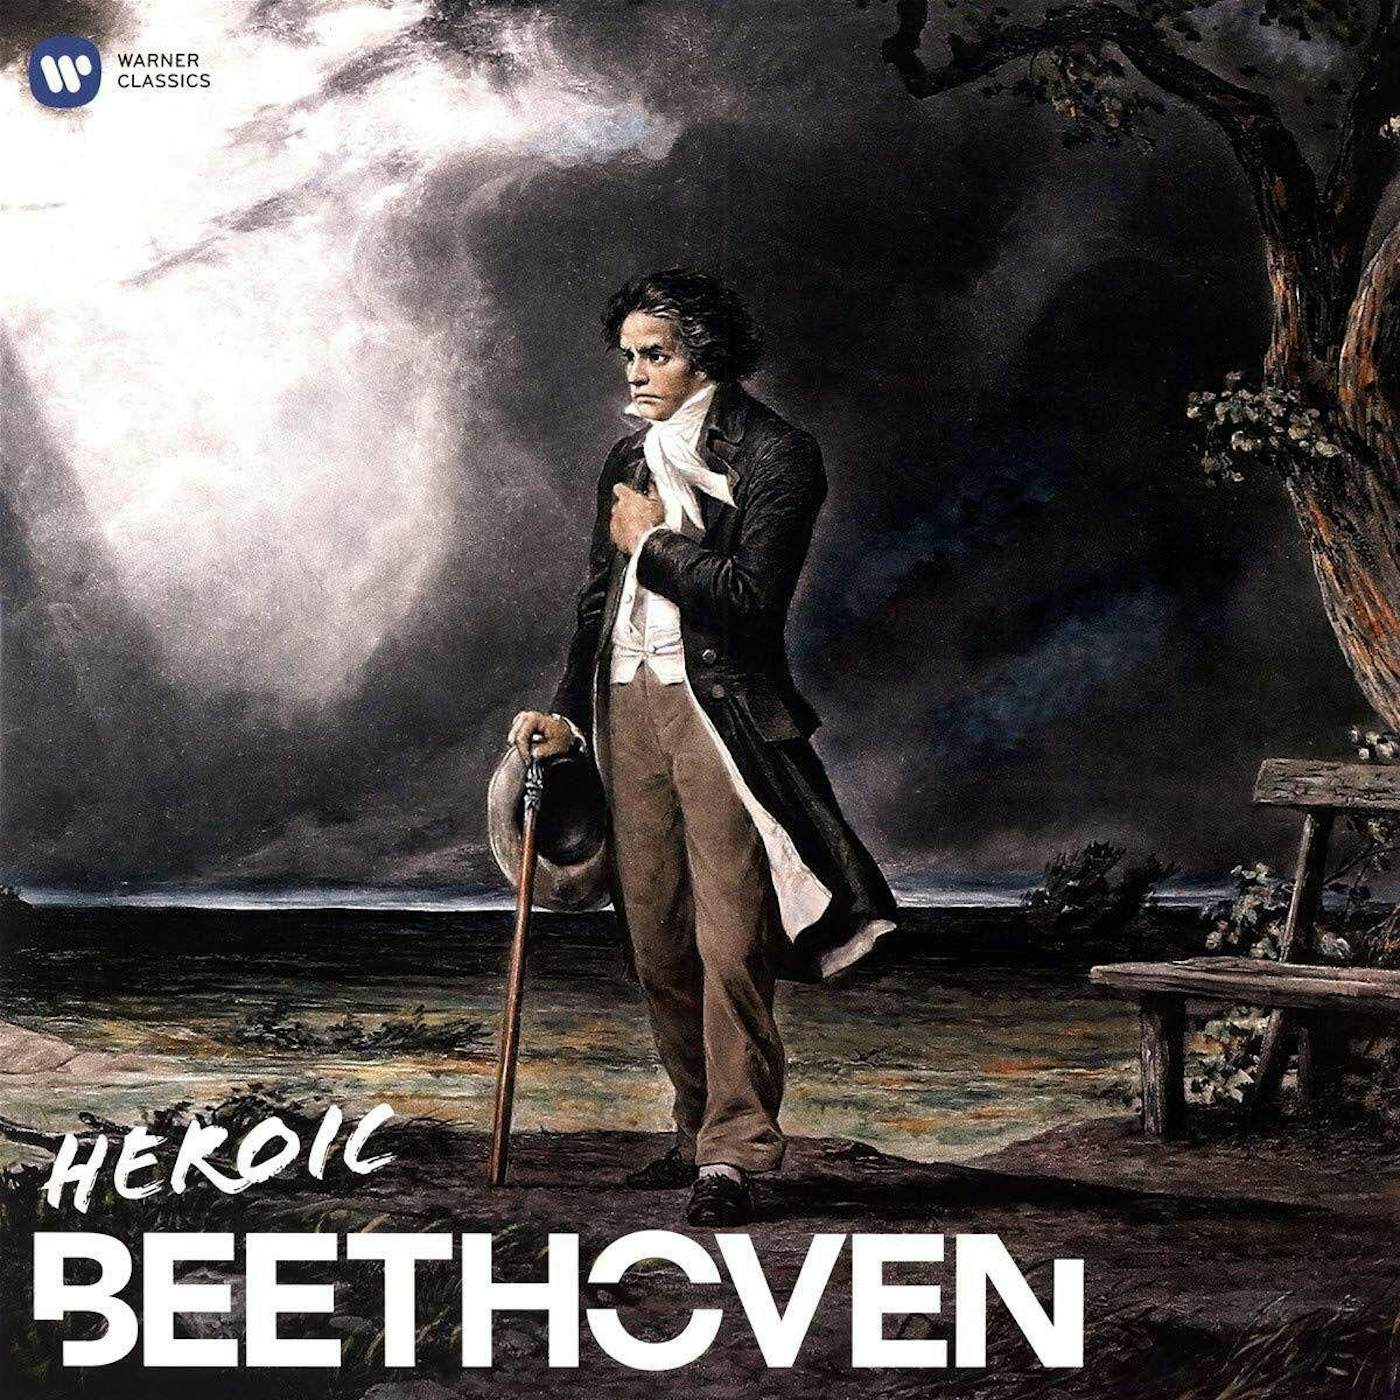  Heroic Beethoven: Best Of Vinyl Record